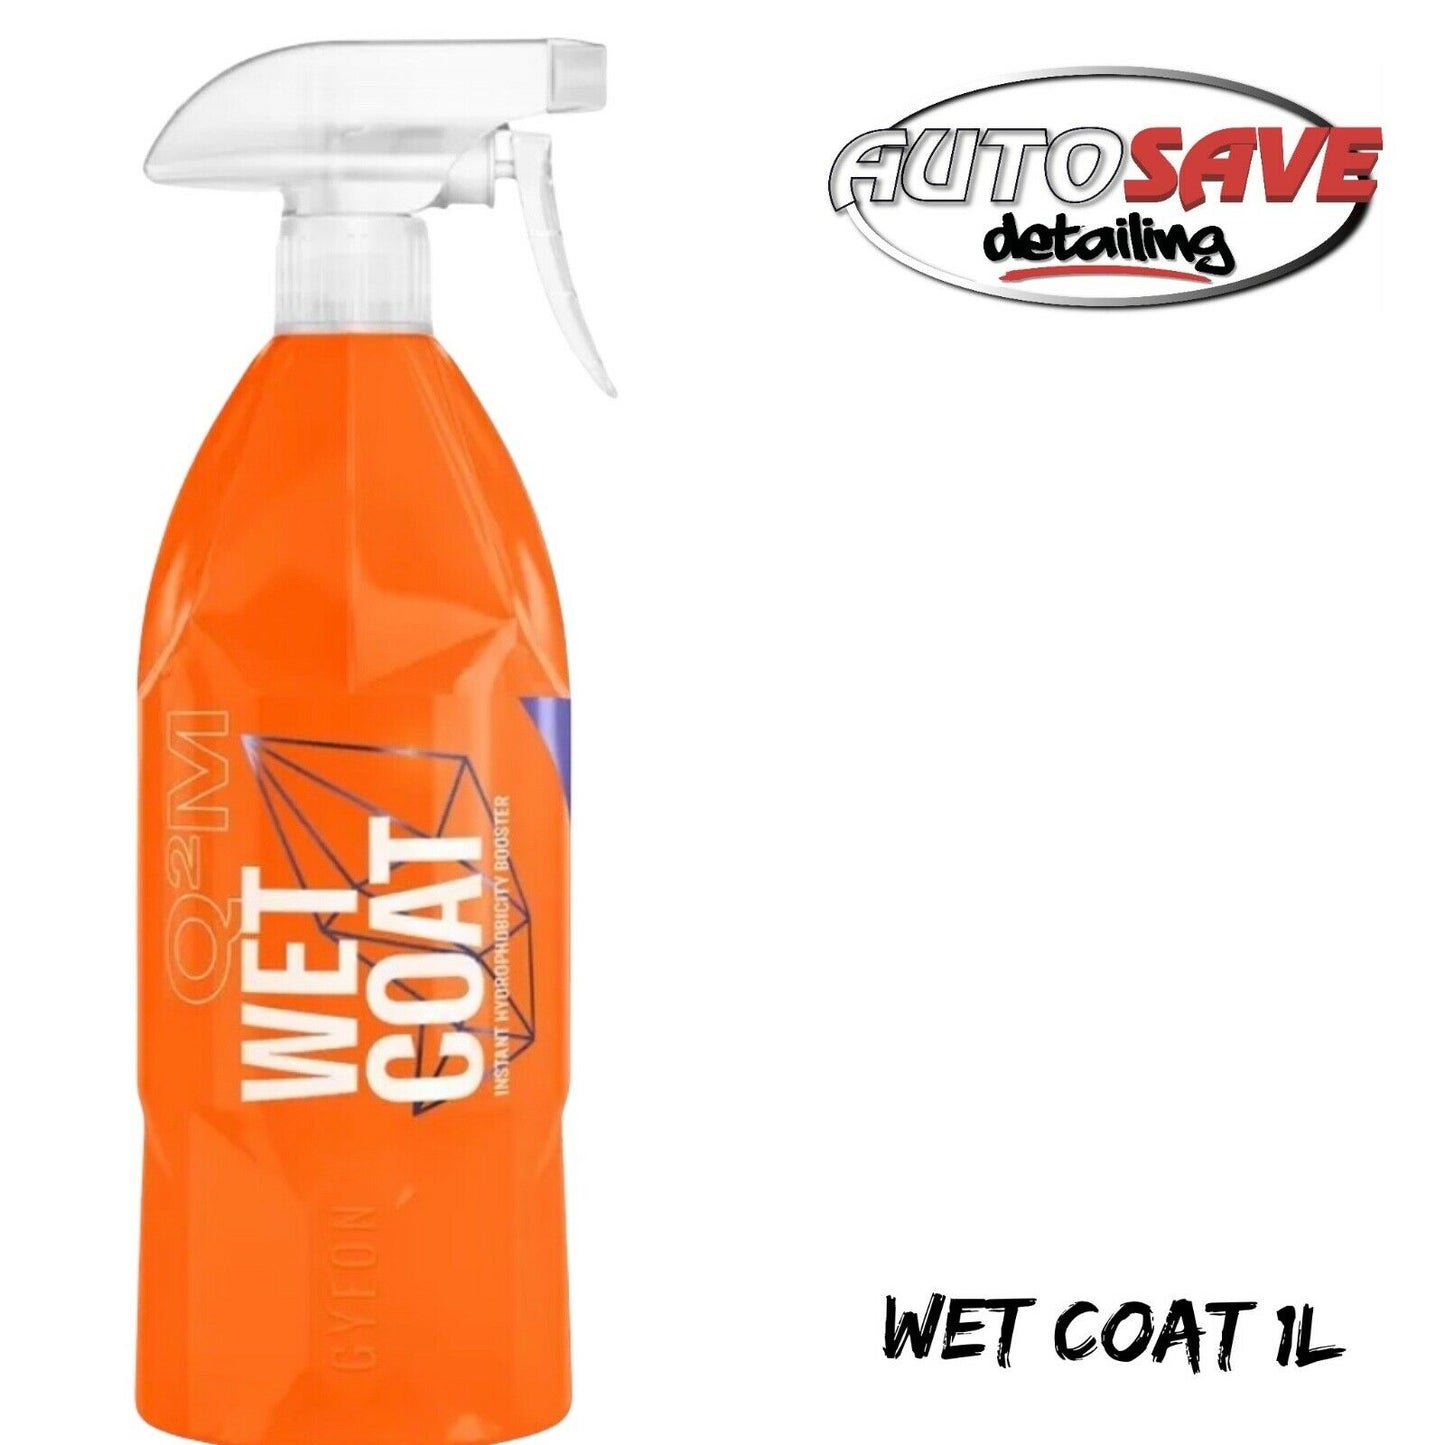 GYEON Q2M WetCoat 4 Liter  Hydrophobic Booster Spray & Rinse 1